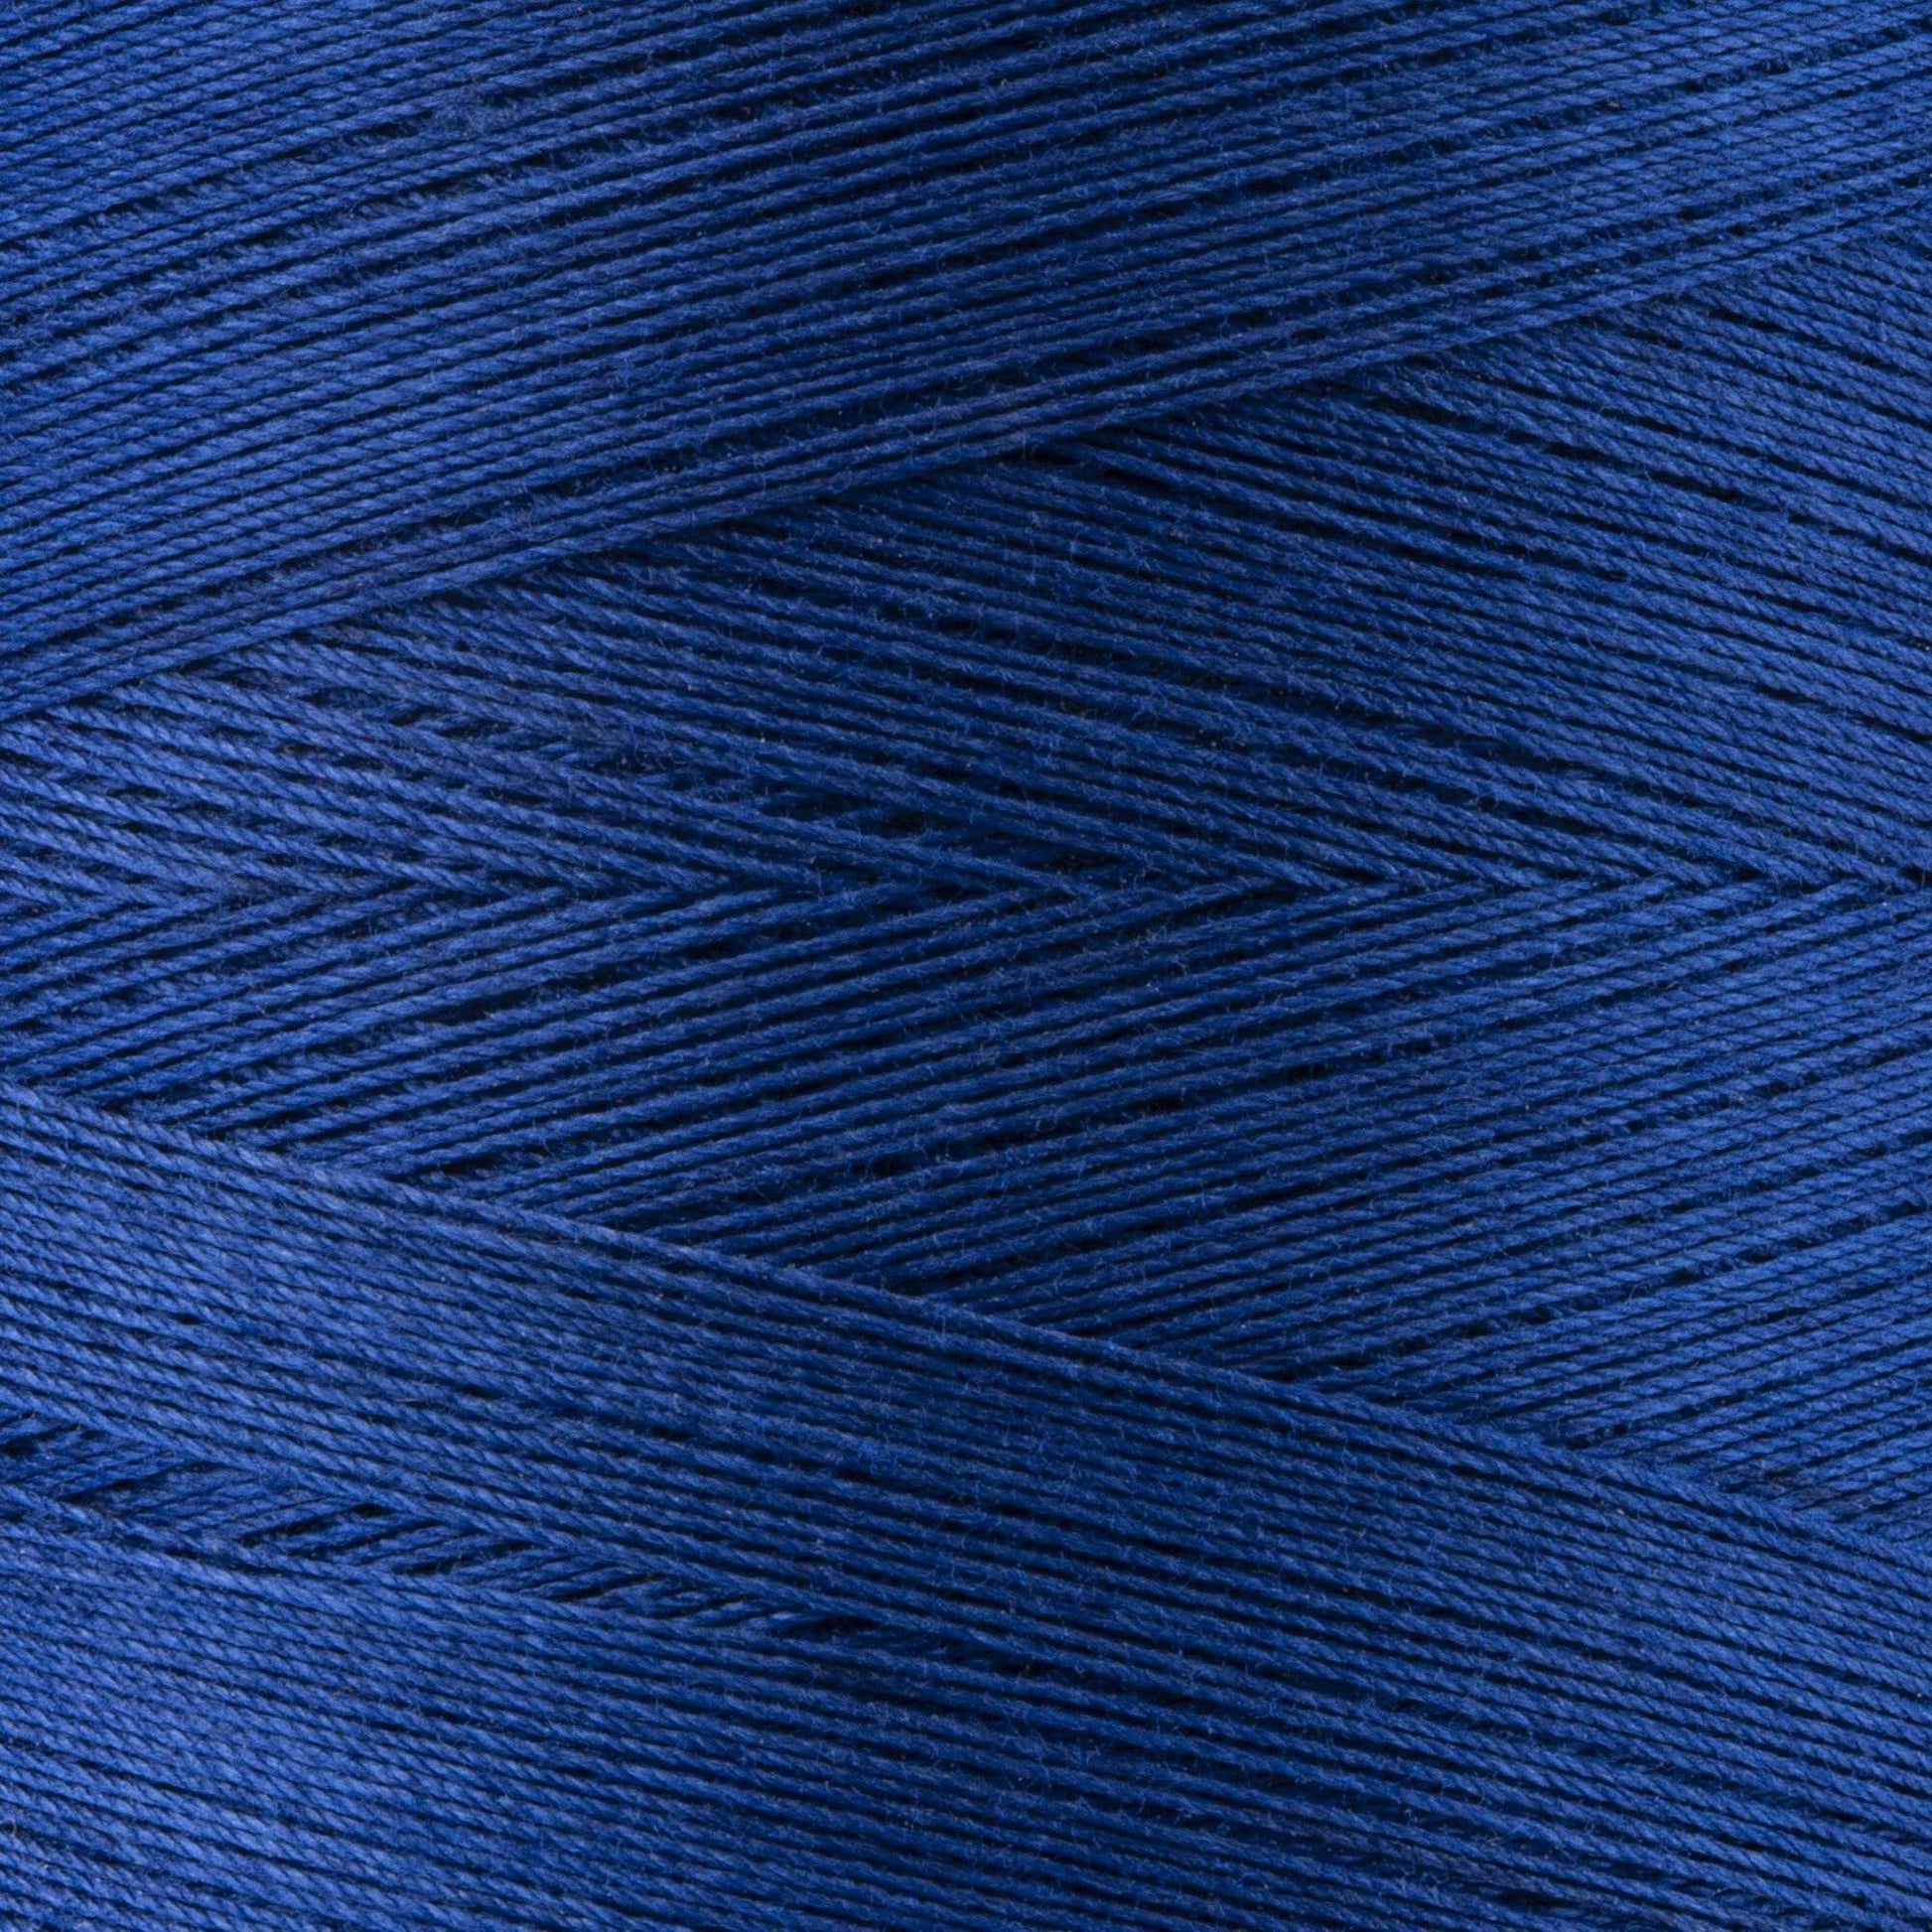 Coats & Clark Cotton Machine Quilting Thread (1200 Yards) Yale Blue